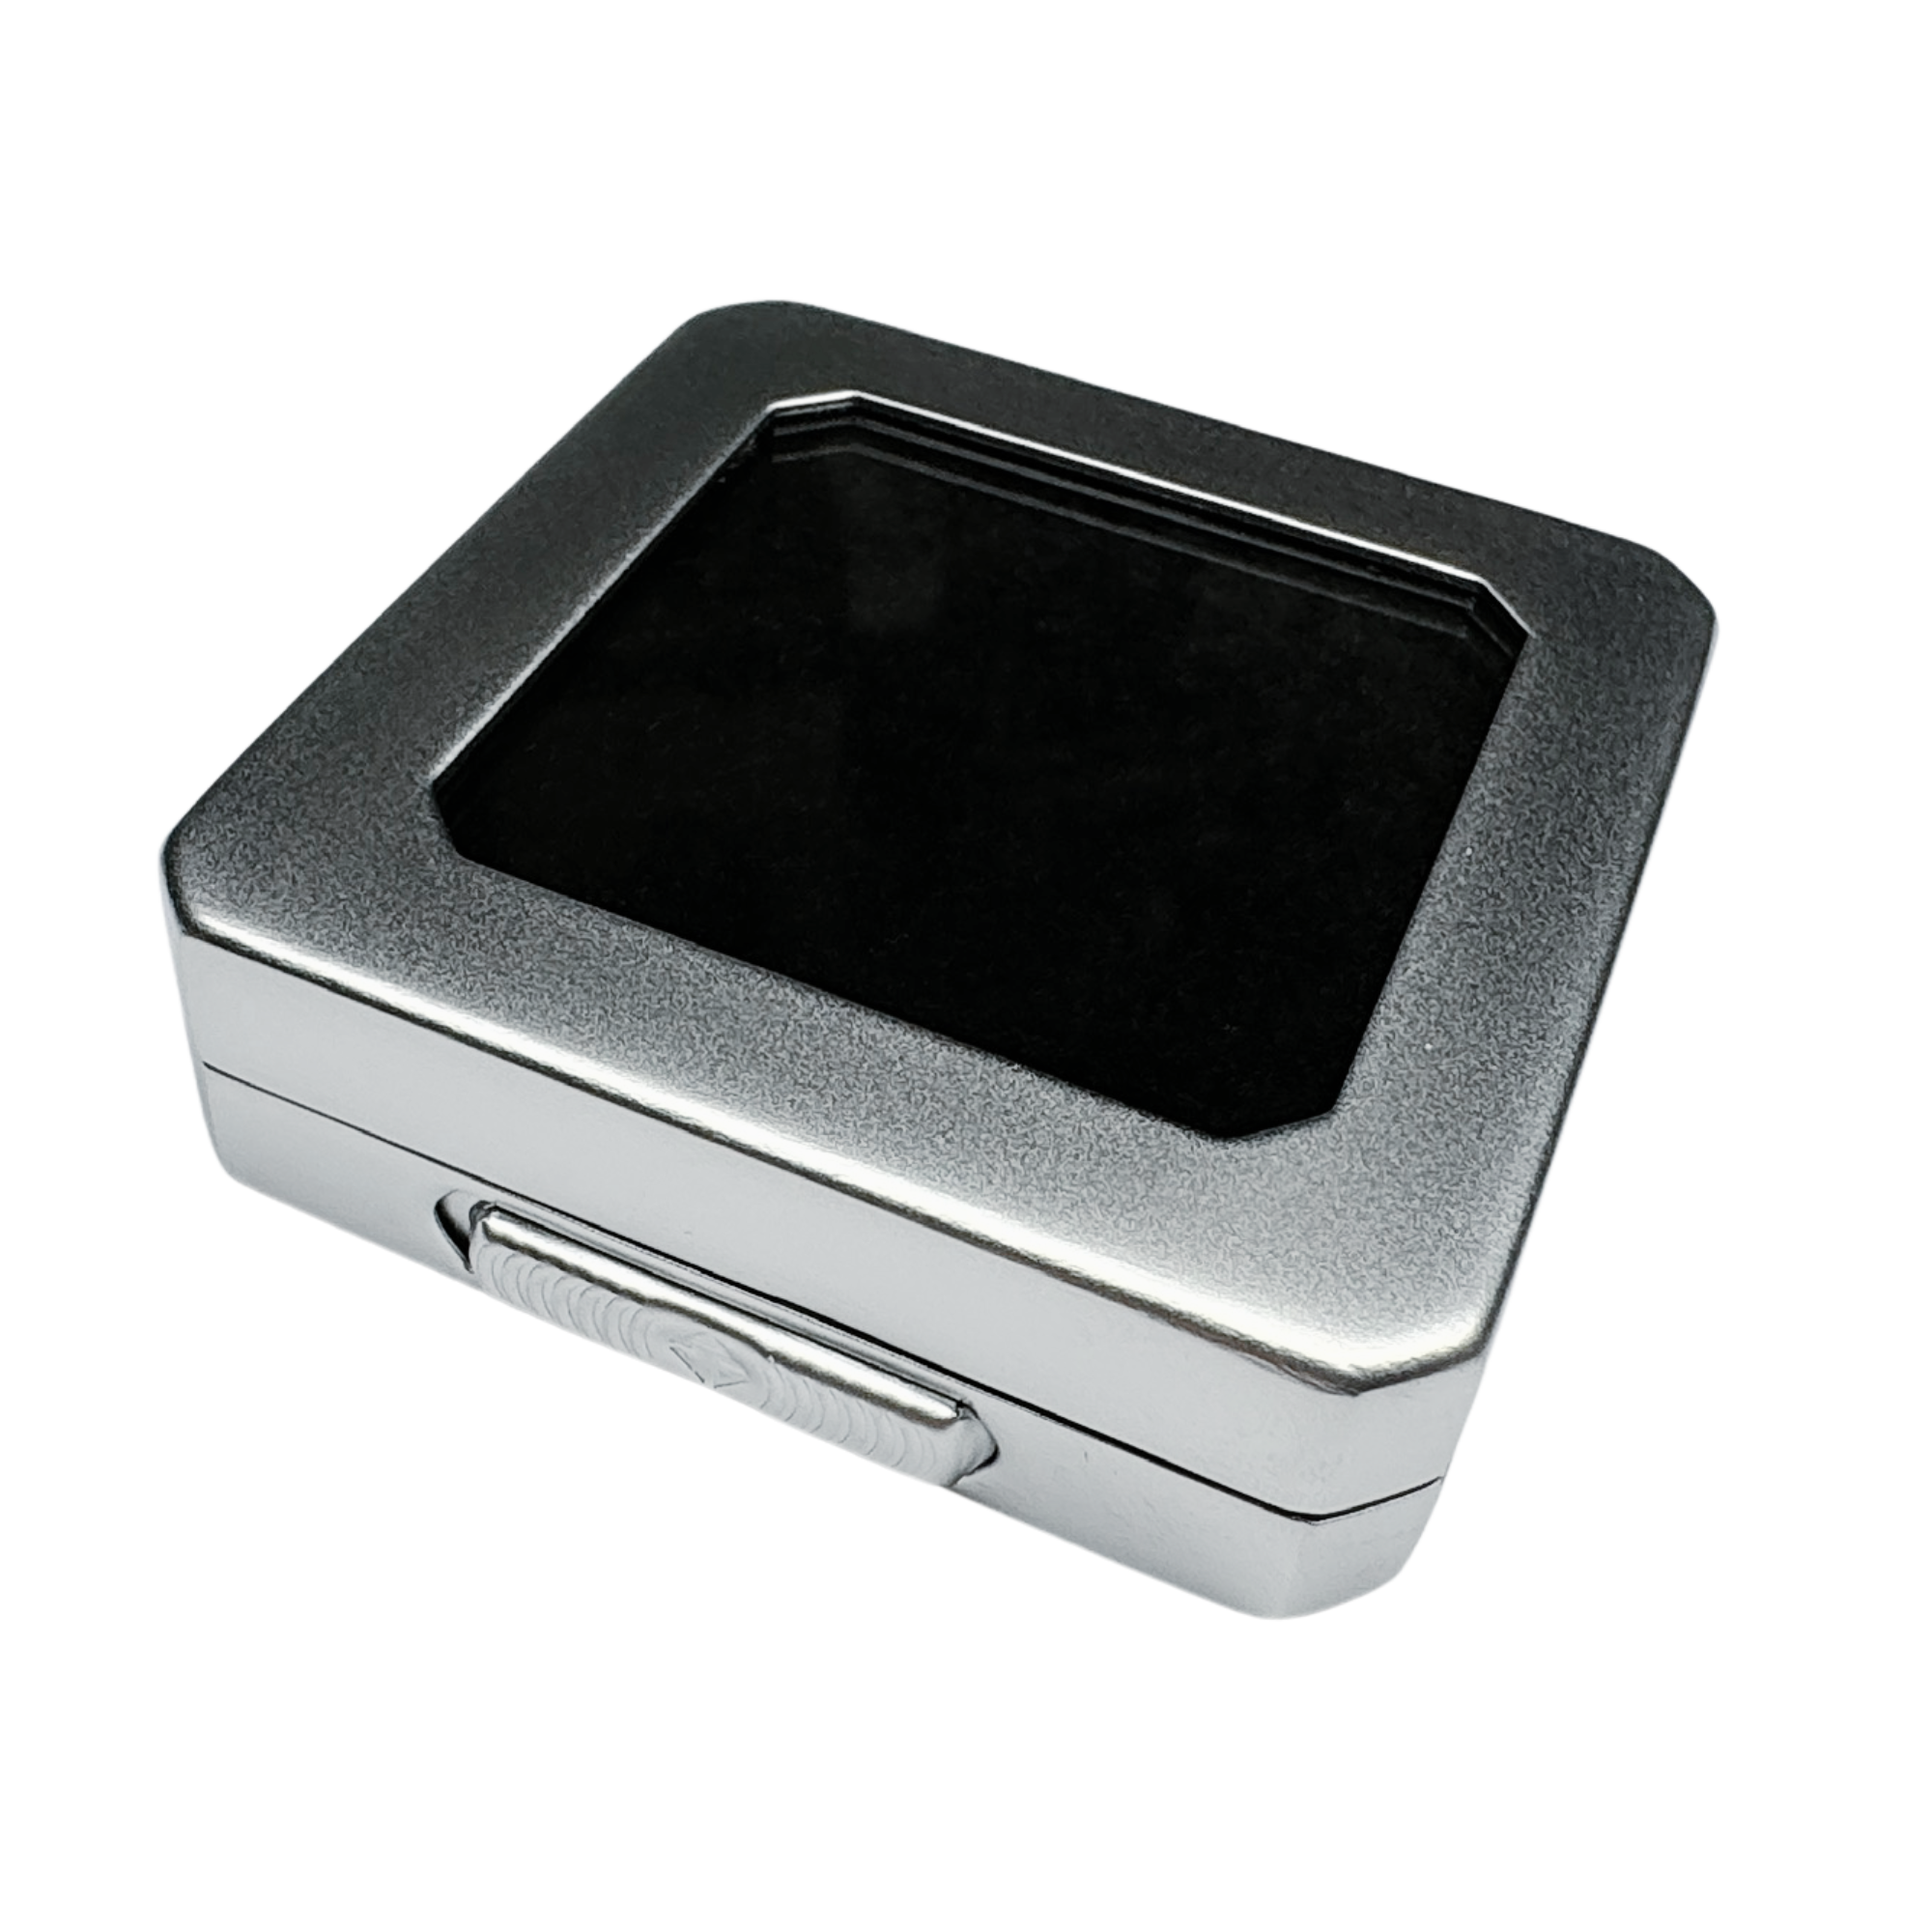 Luxury metal box for precious stones - beveled corners